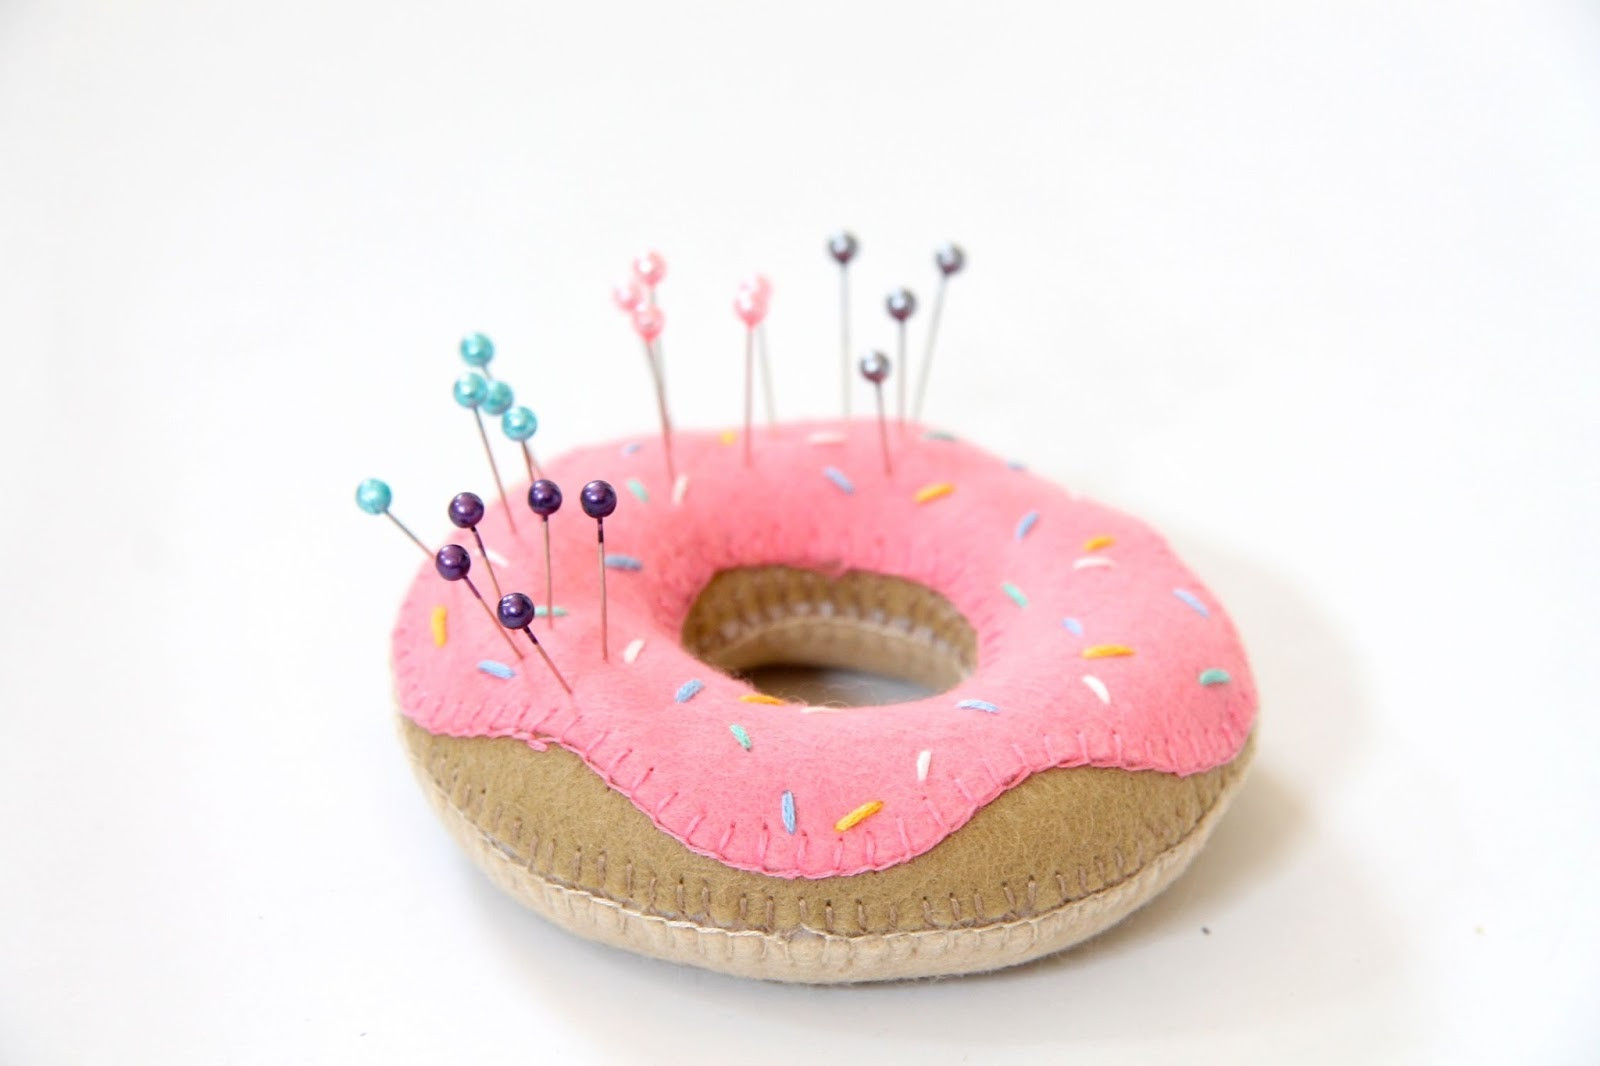 Best ideas about DIY Pin Cushion
. Save or Pin Doughnut Pin Cushion Tutorial Now.